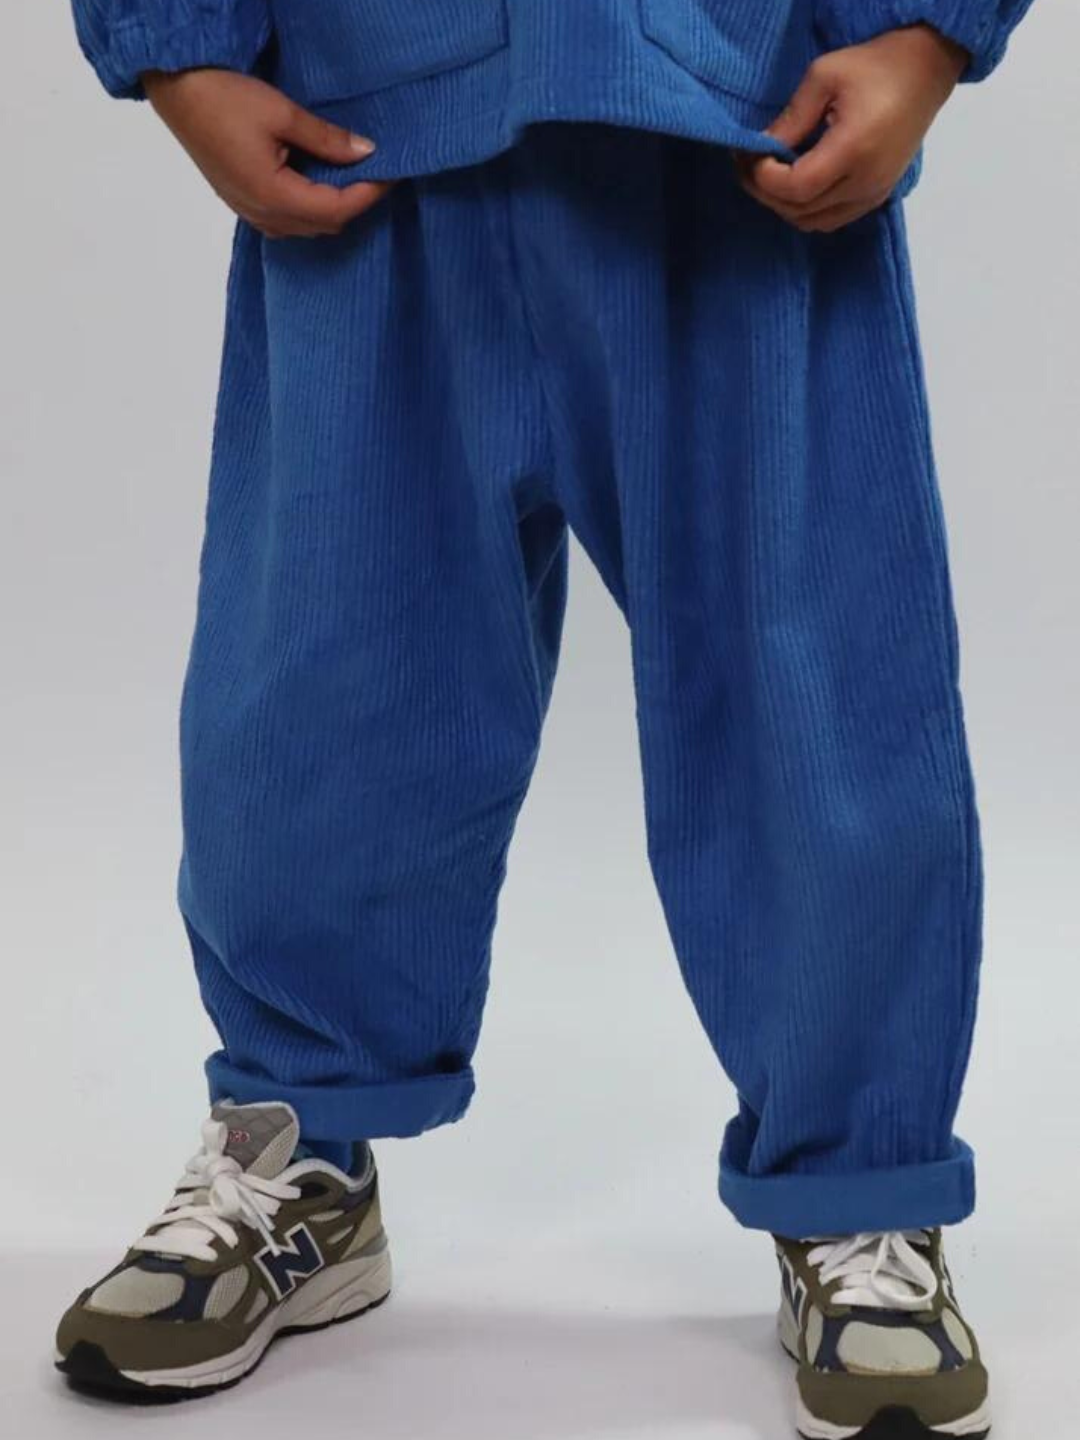 Child wearing blue kids' pants